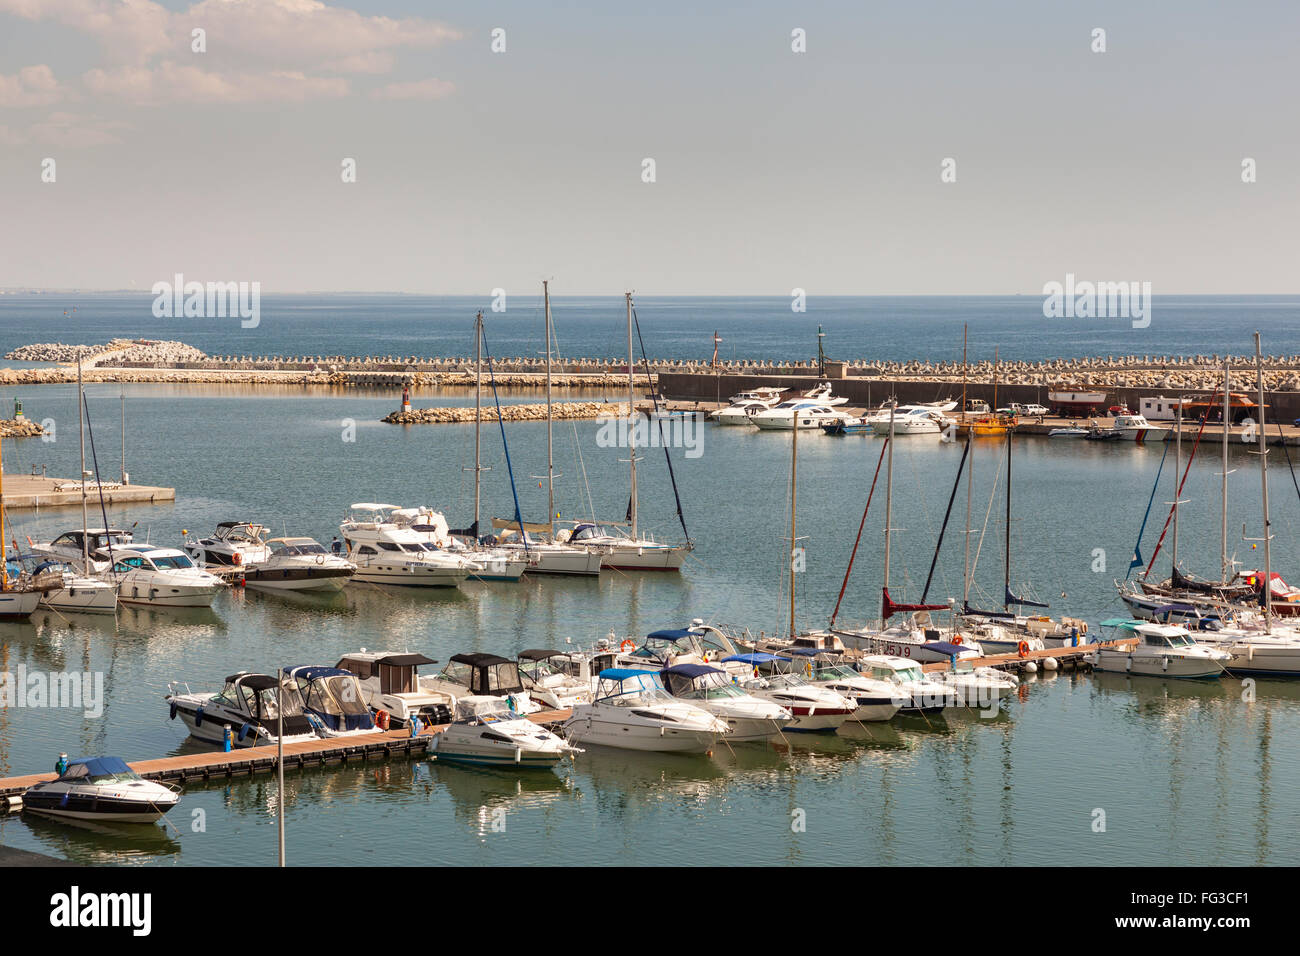 The marina, Tomis Tourist Port, Constanta, Romania Stock Photo - Alamy